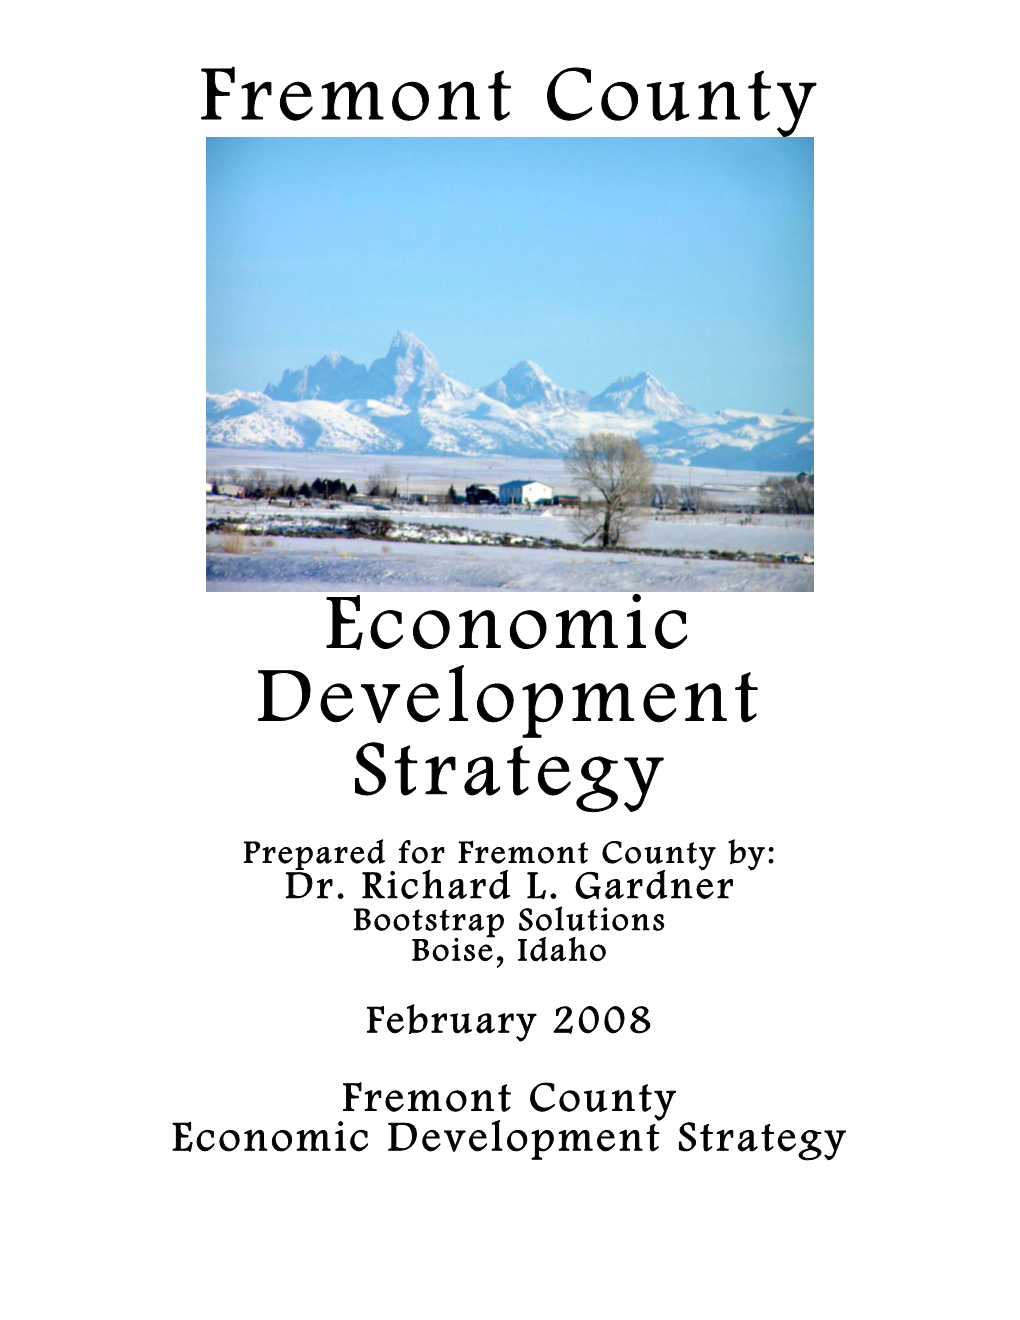 2008 Fremont County Economic Development Strategy